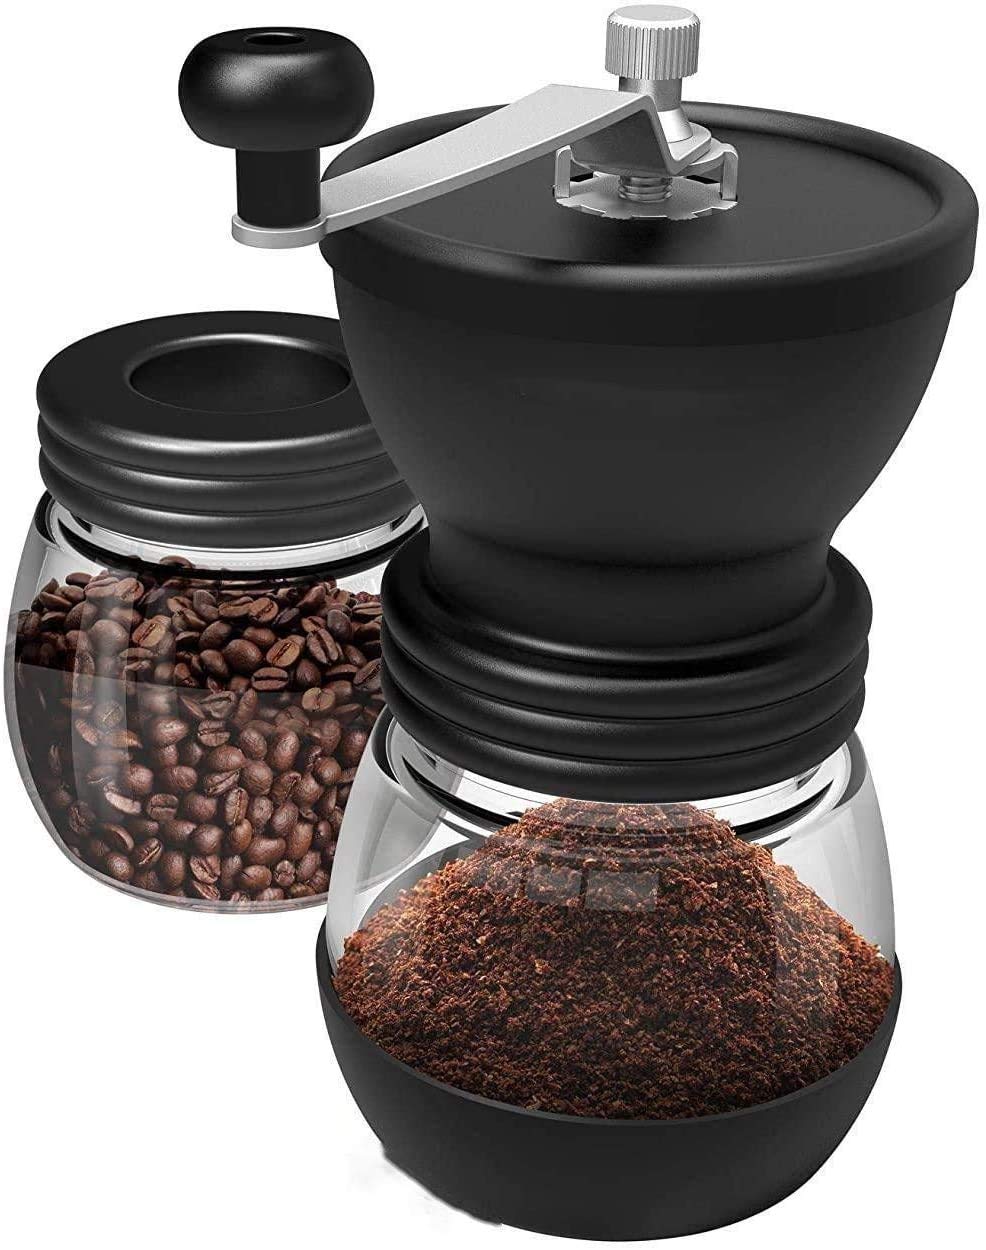 Jeeone Manual Coffee Bean Grinder, Hand Coffee Mill with 2 Glass Jars Ceramic Burr Stainless Steel Handle for Aeropress, Drip Coffee, Espresso